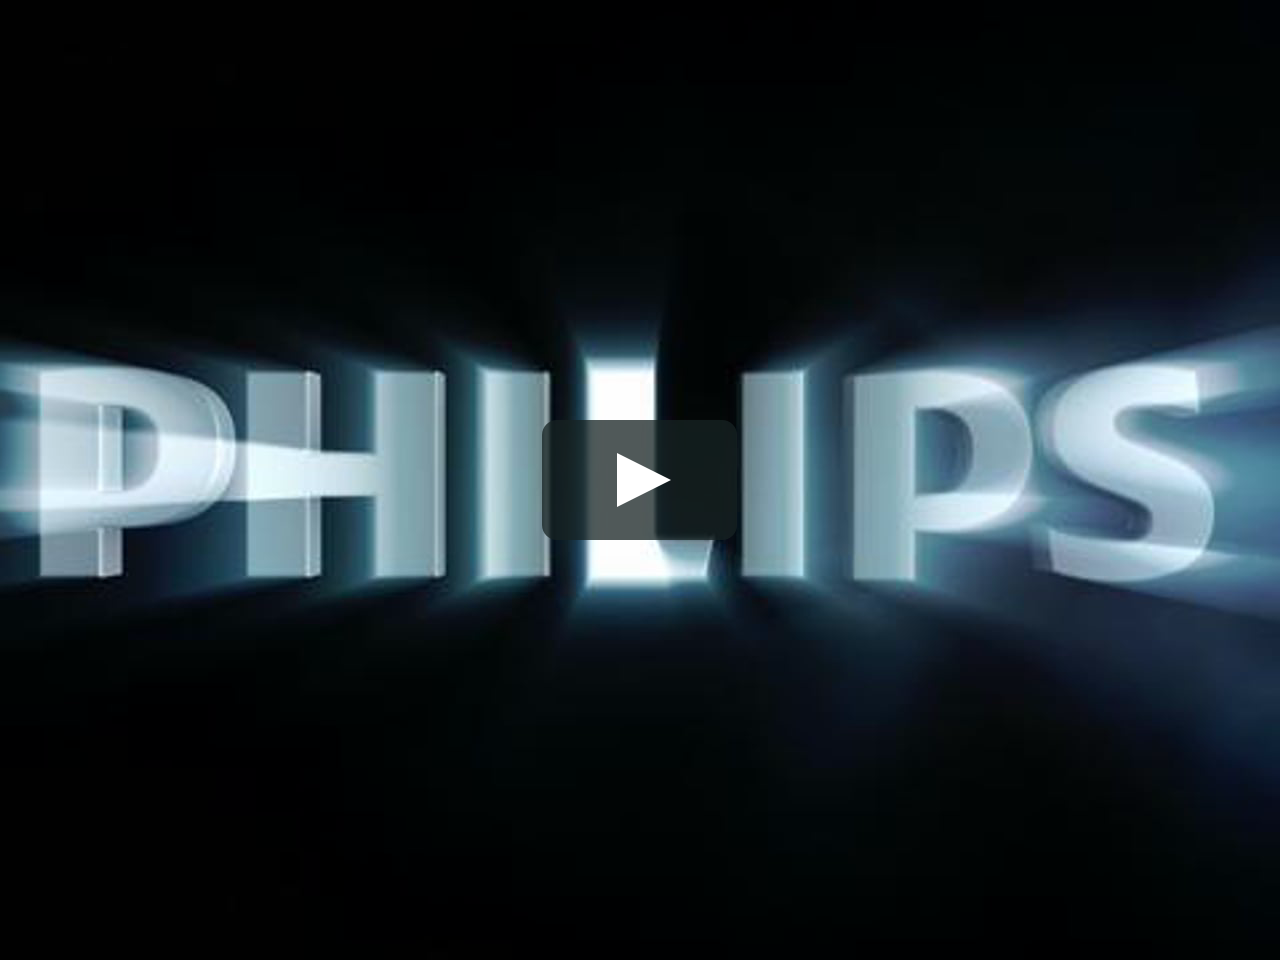 Филипс логотип